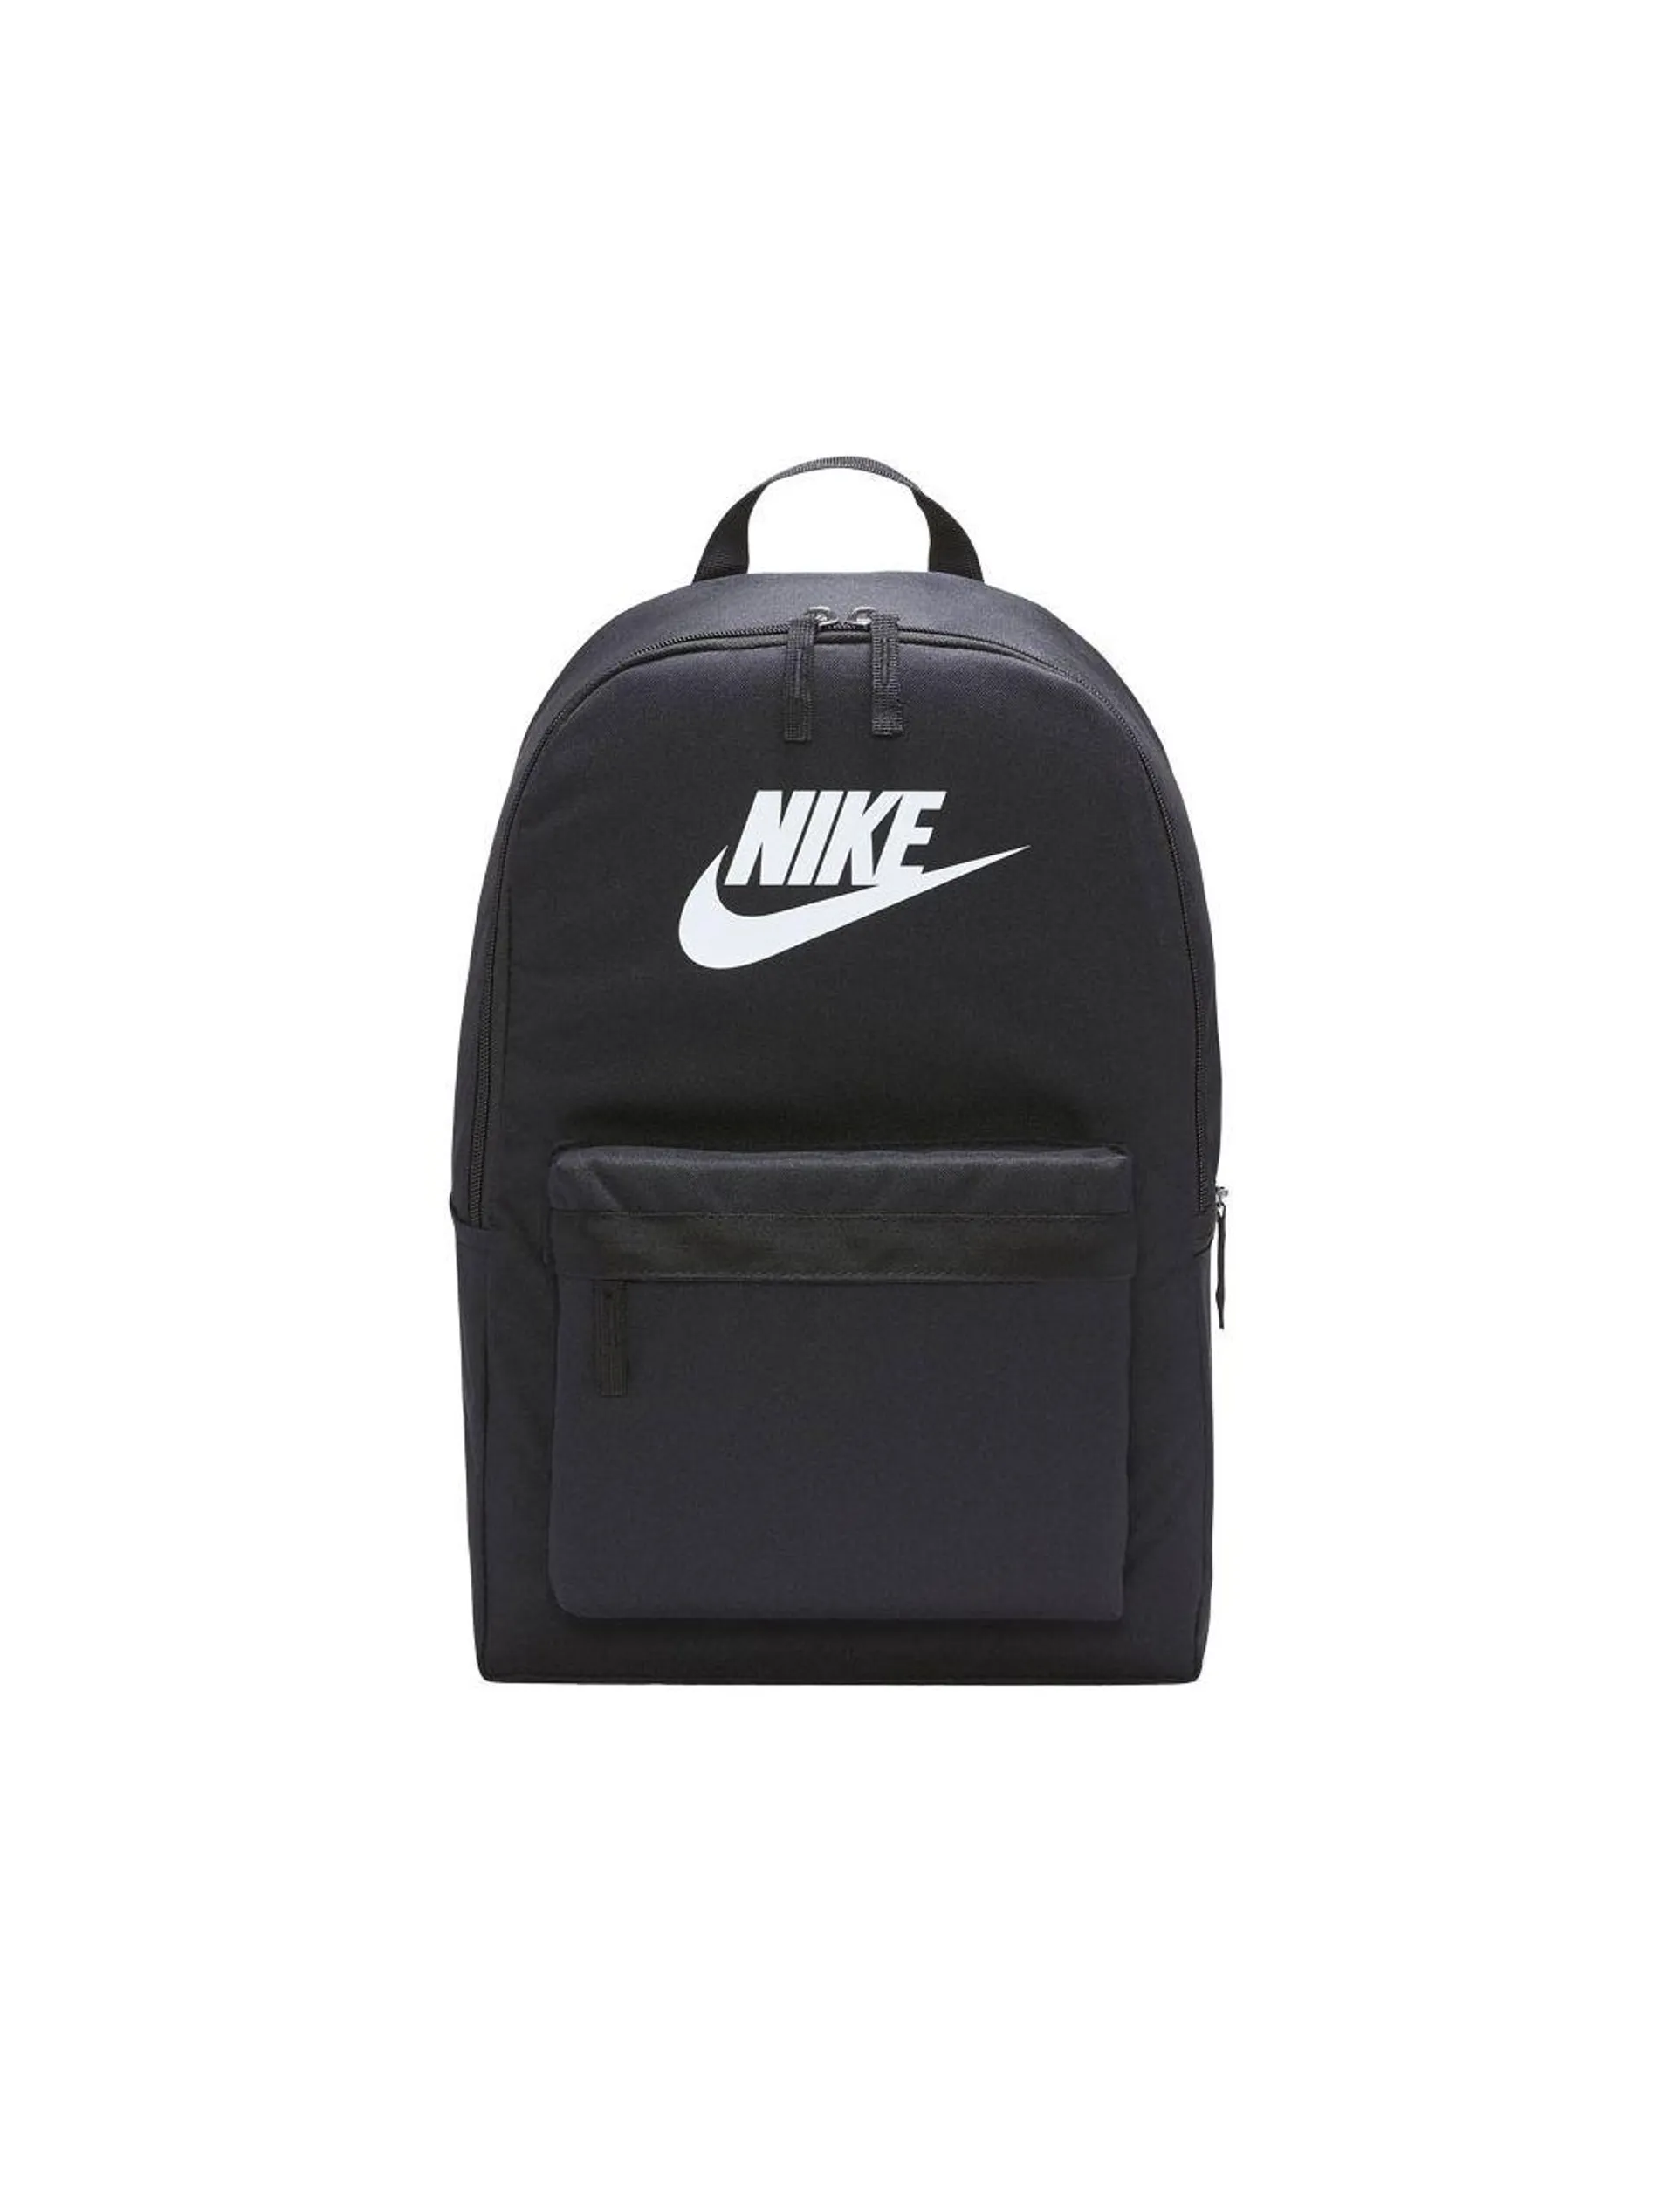 Nike Heritage Backpack Black/White